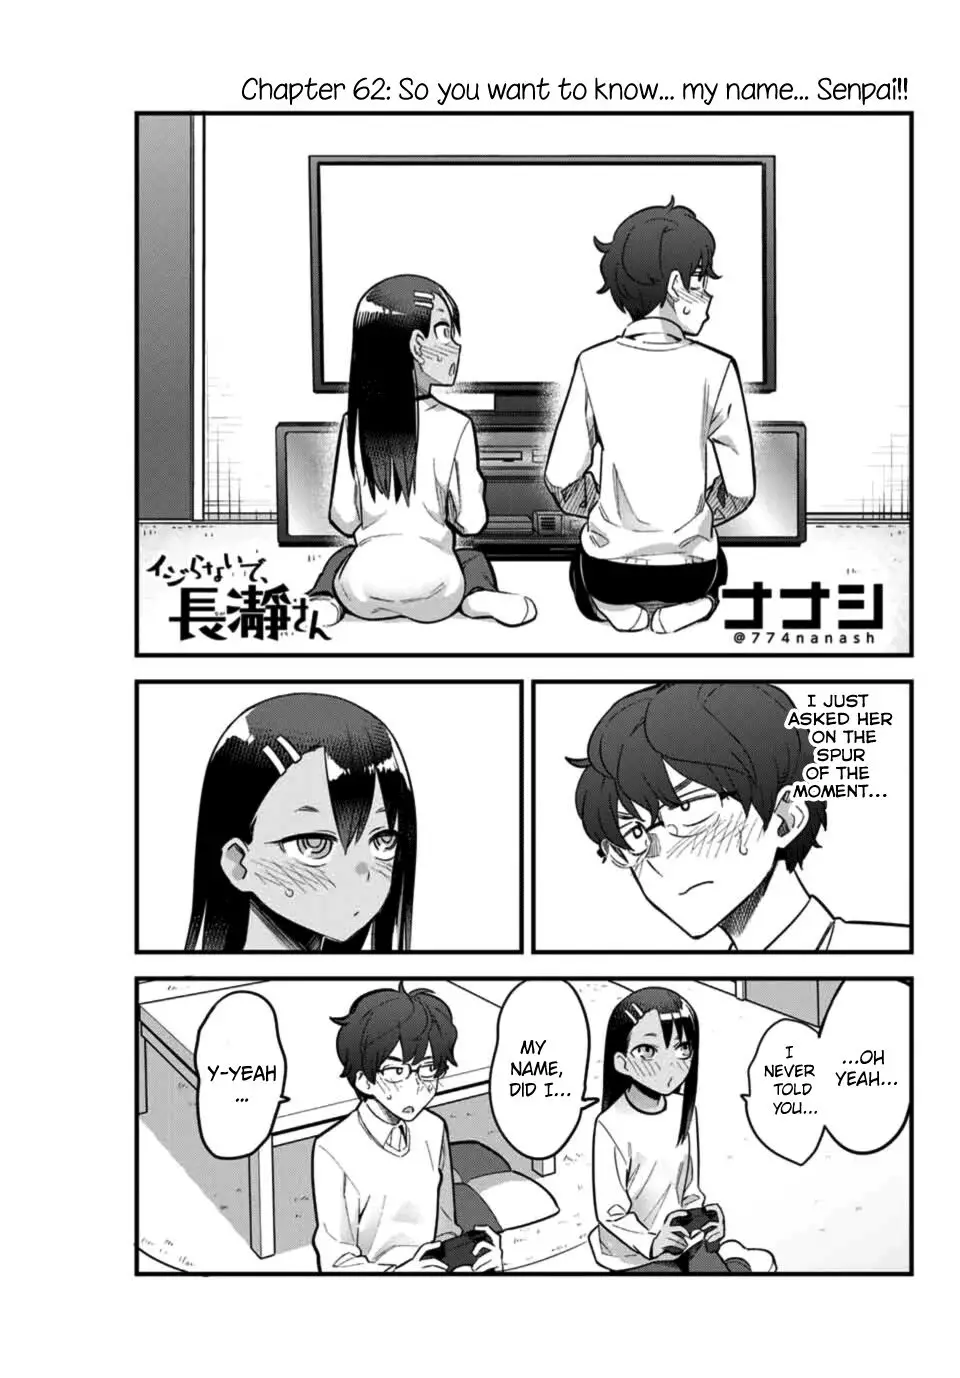 Please don't bully me, Nagatoro - 62 page 1